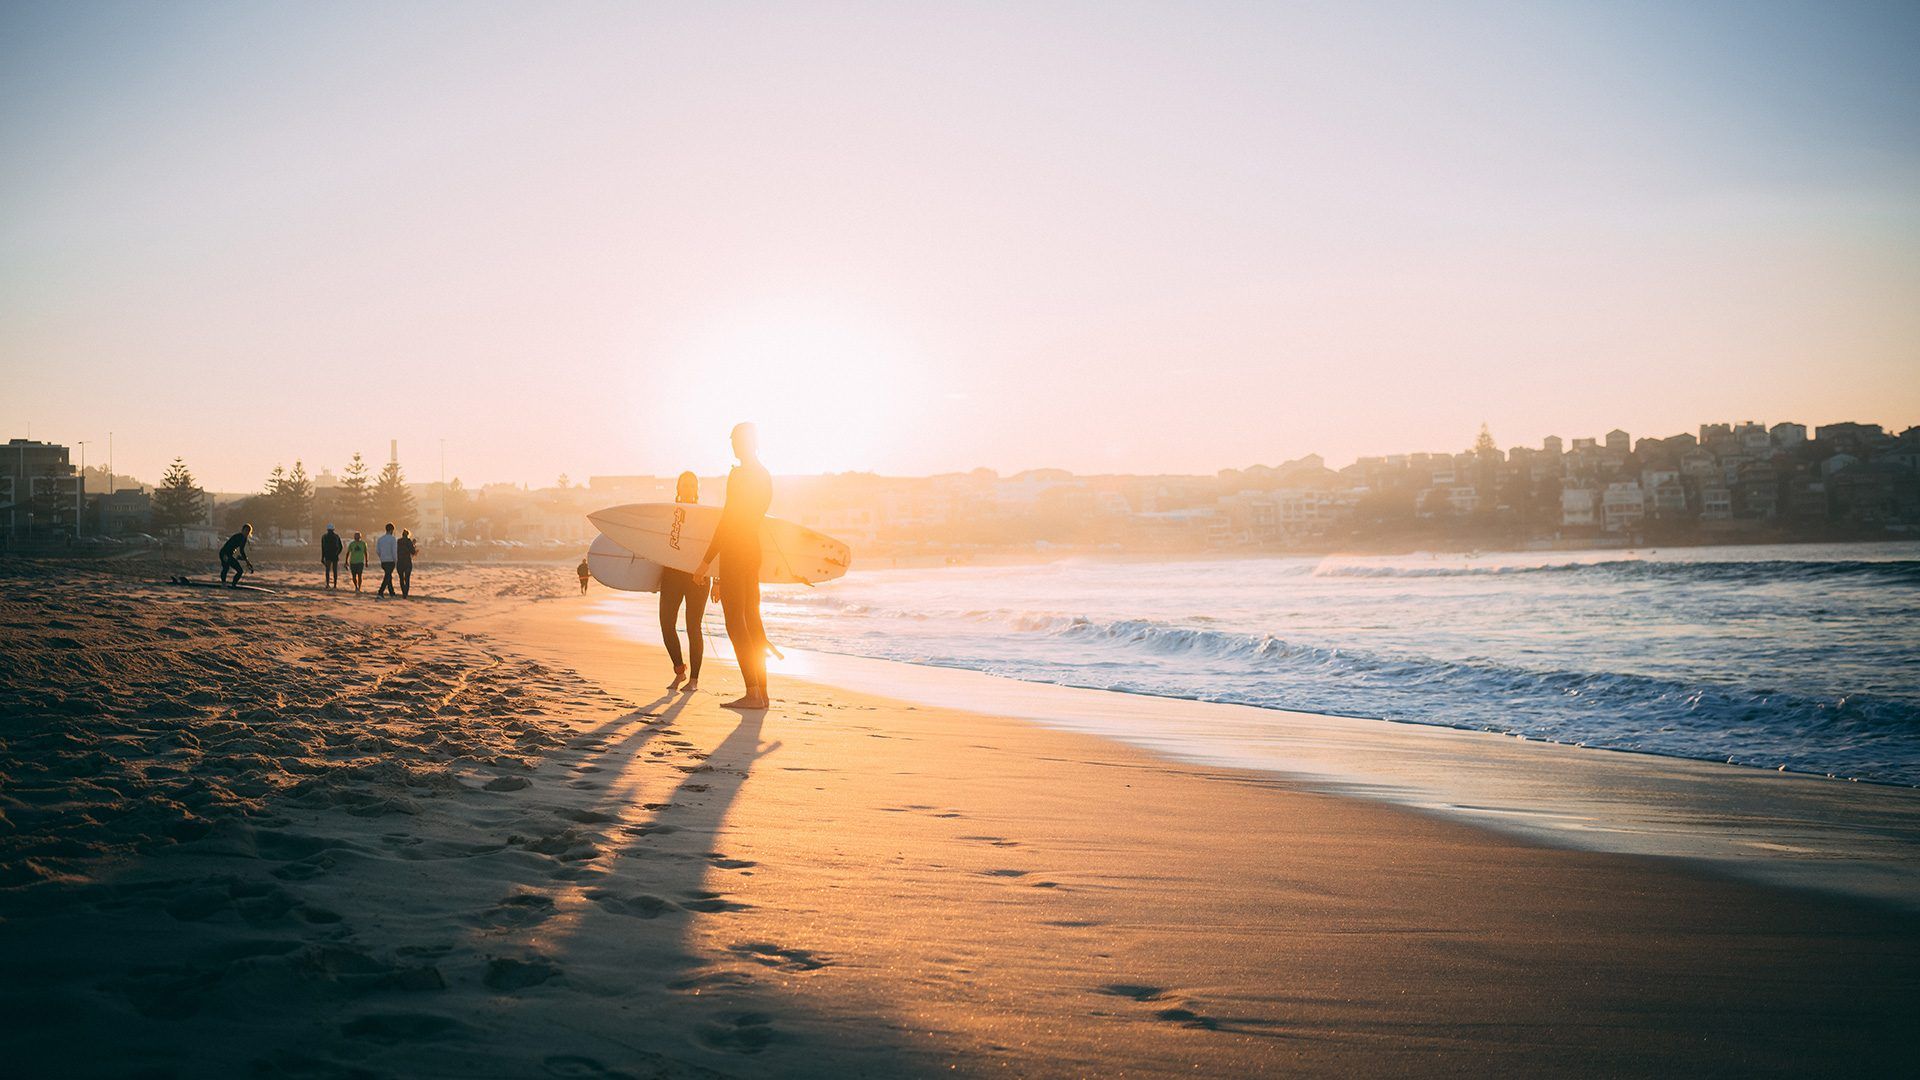 Morning surfers at iconic Bondi Beach